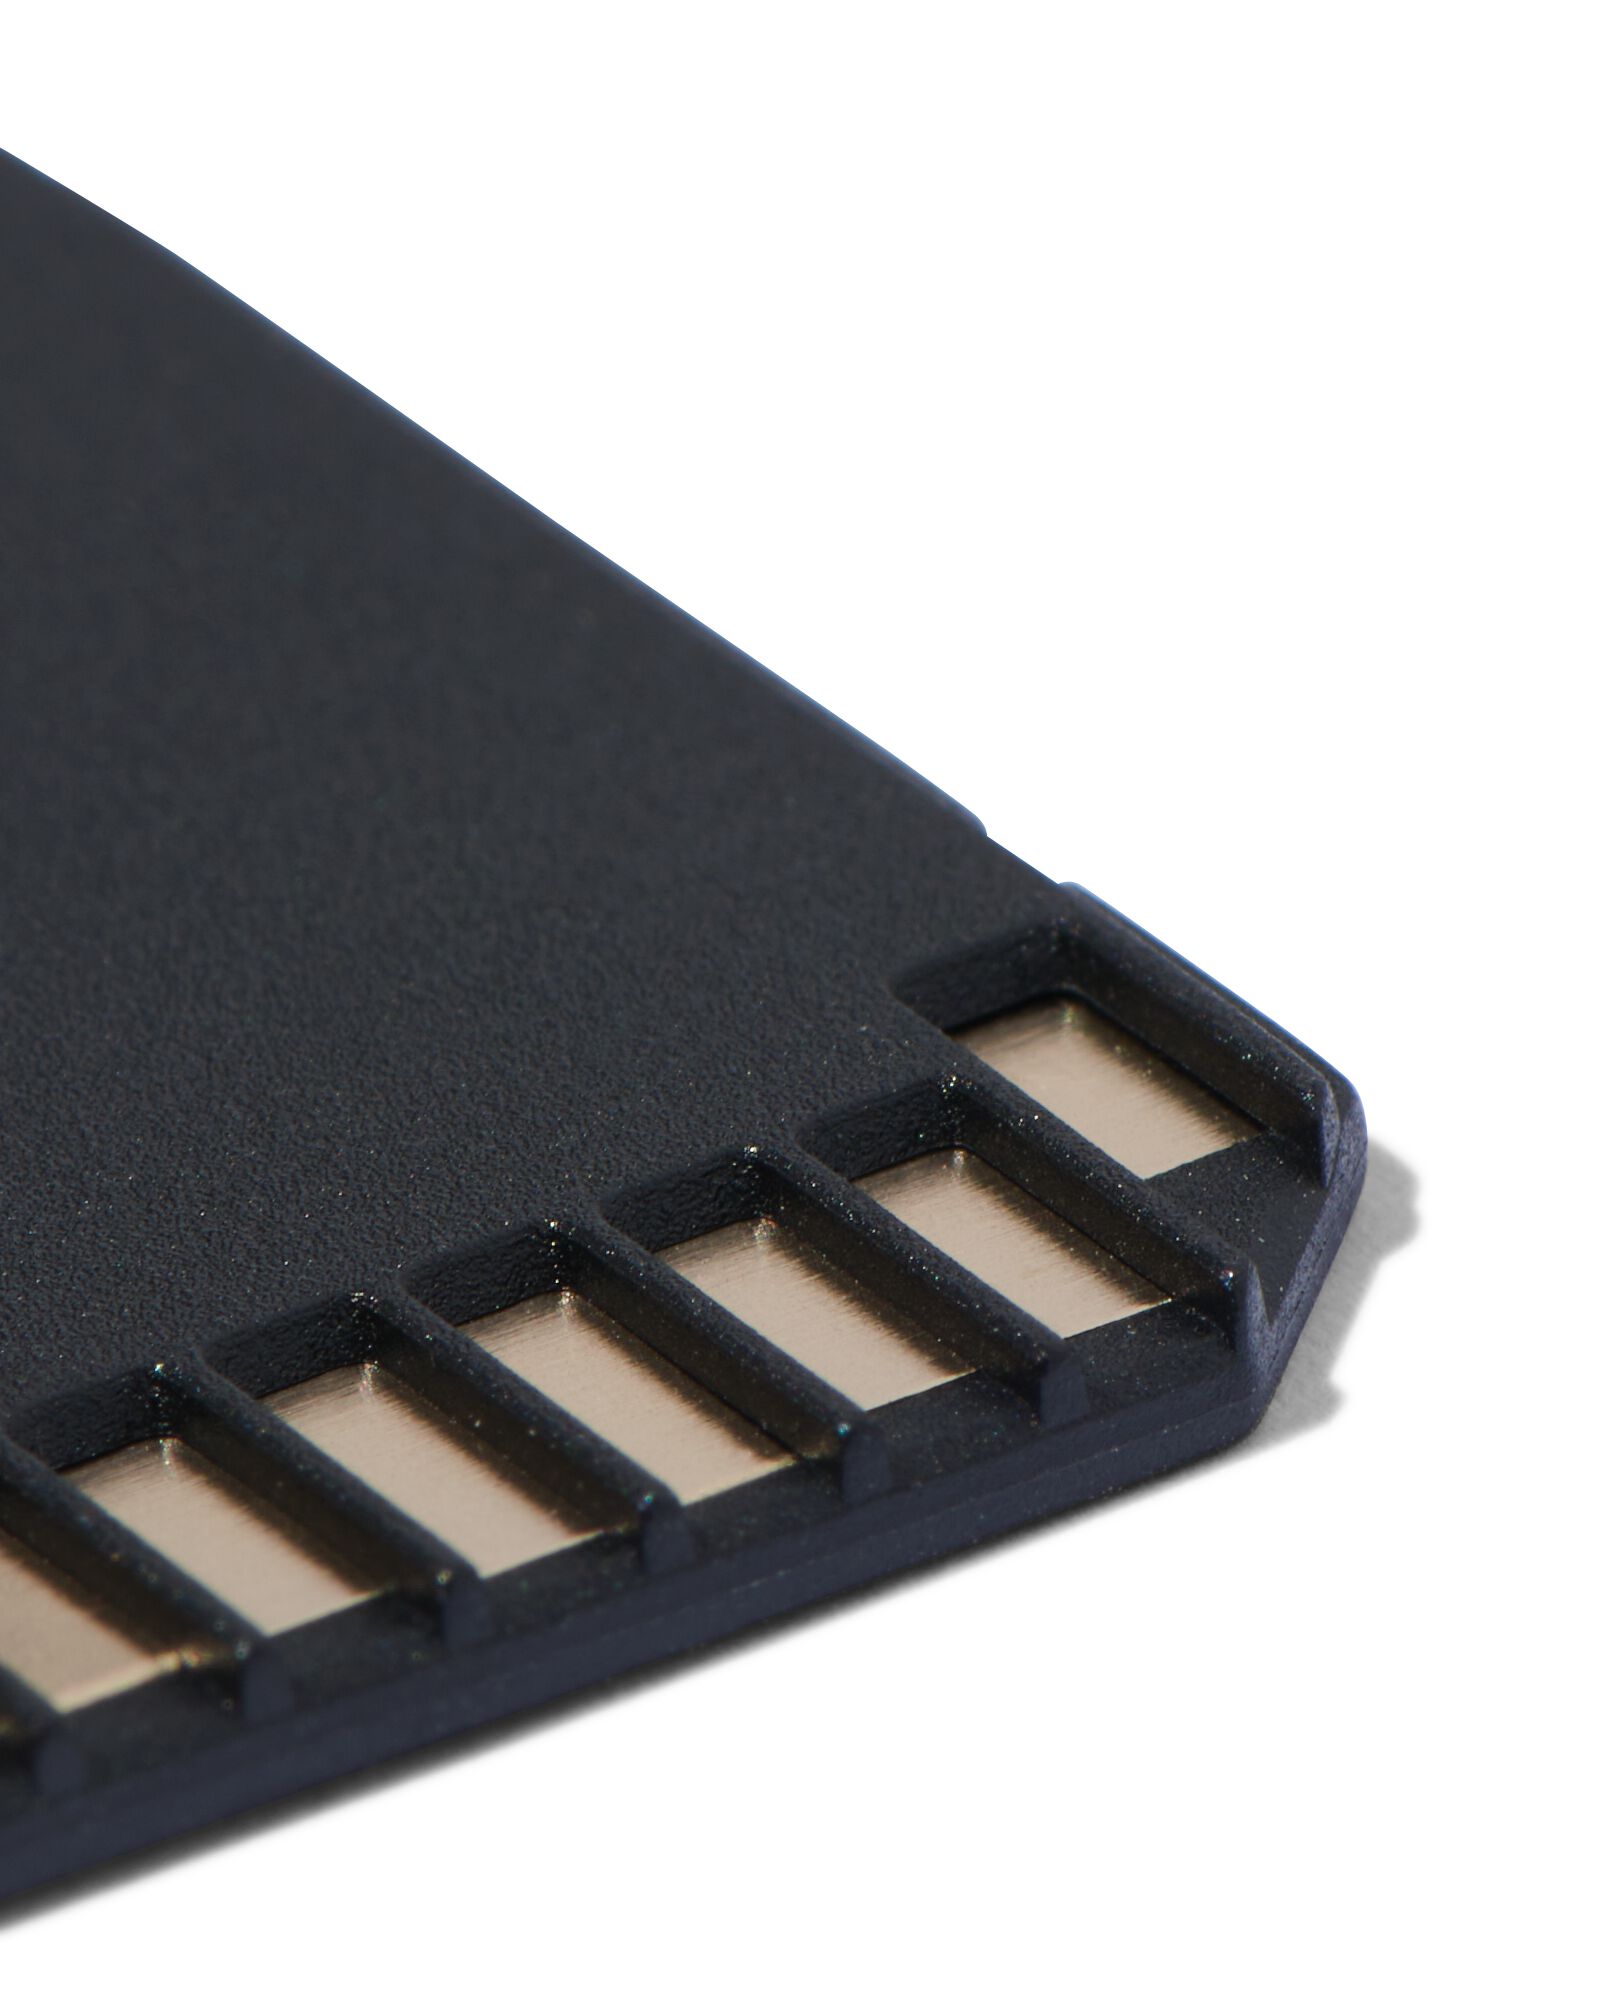 Mikro-SD-Speicherkarte, 16 GB - 39520010 - HEMA